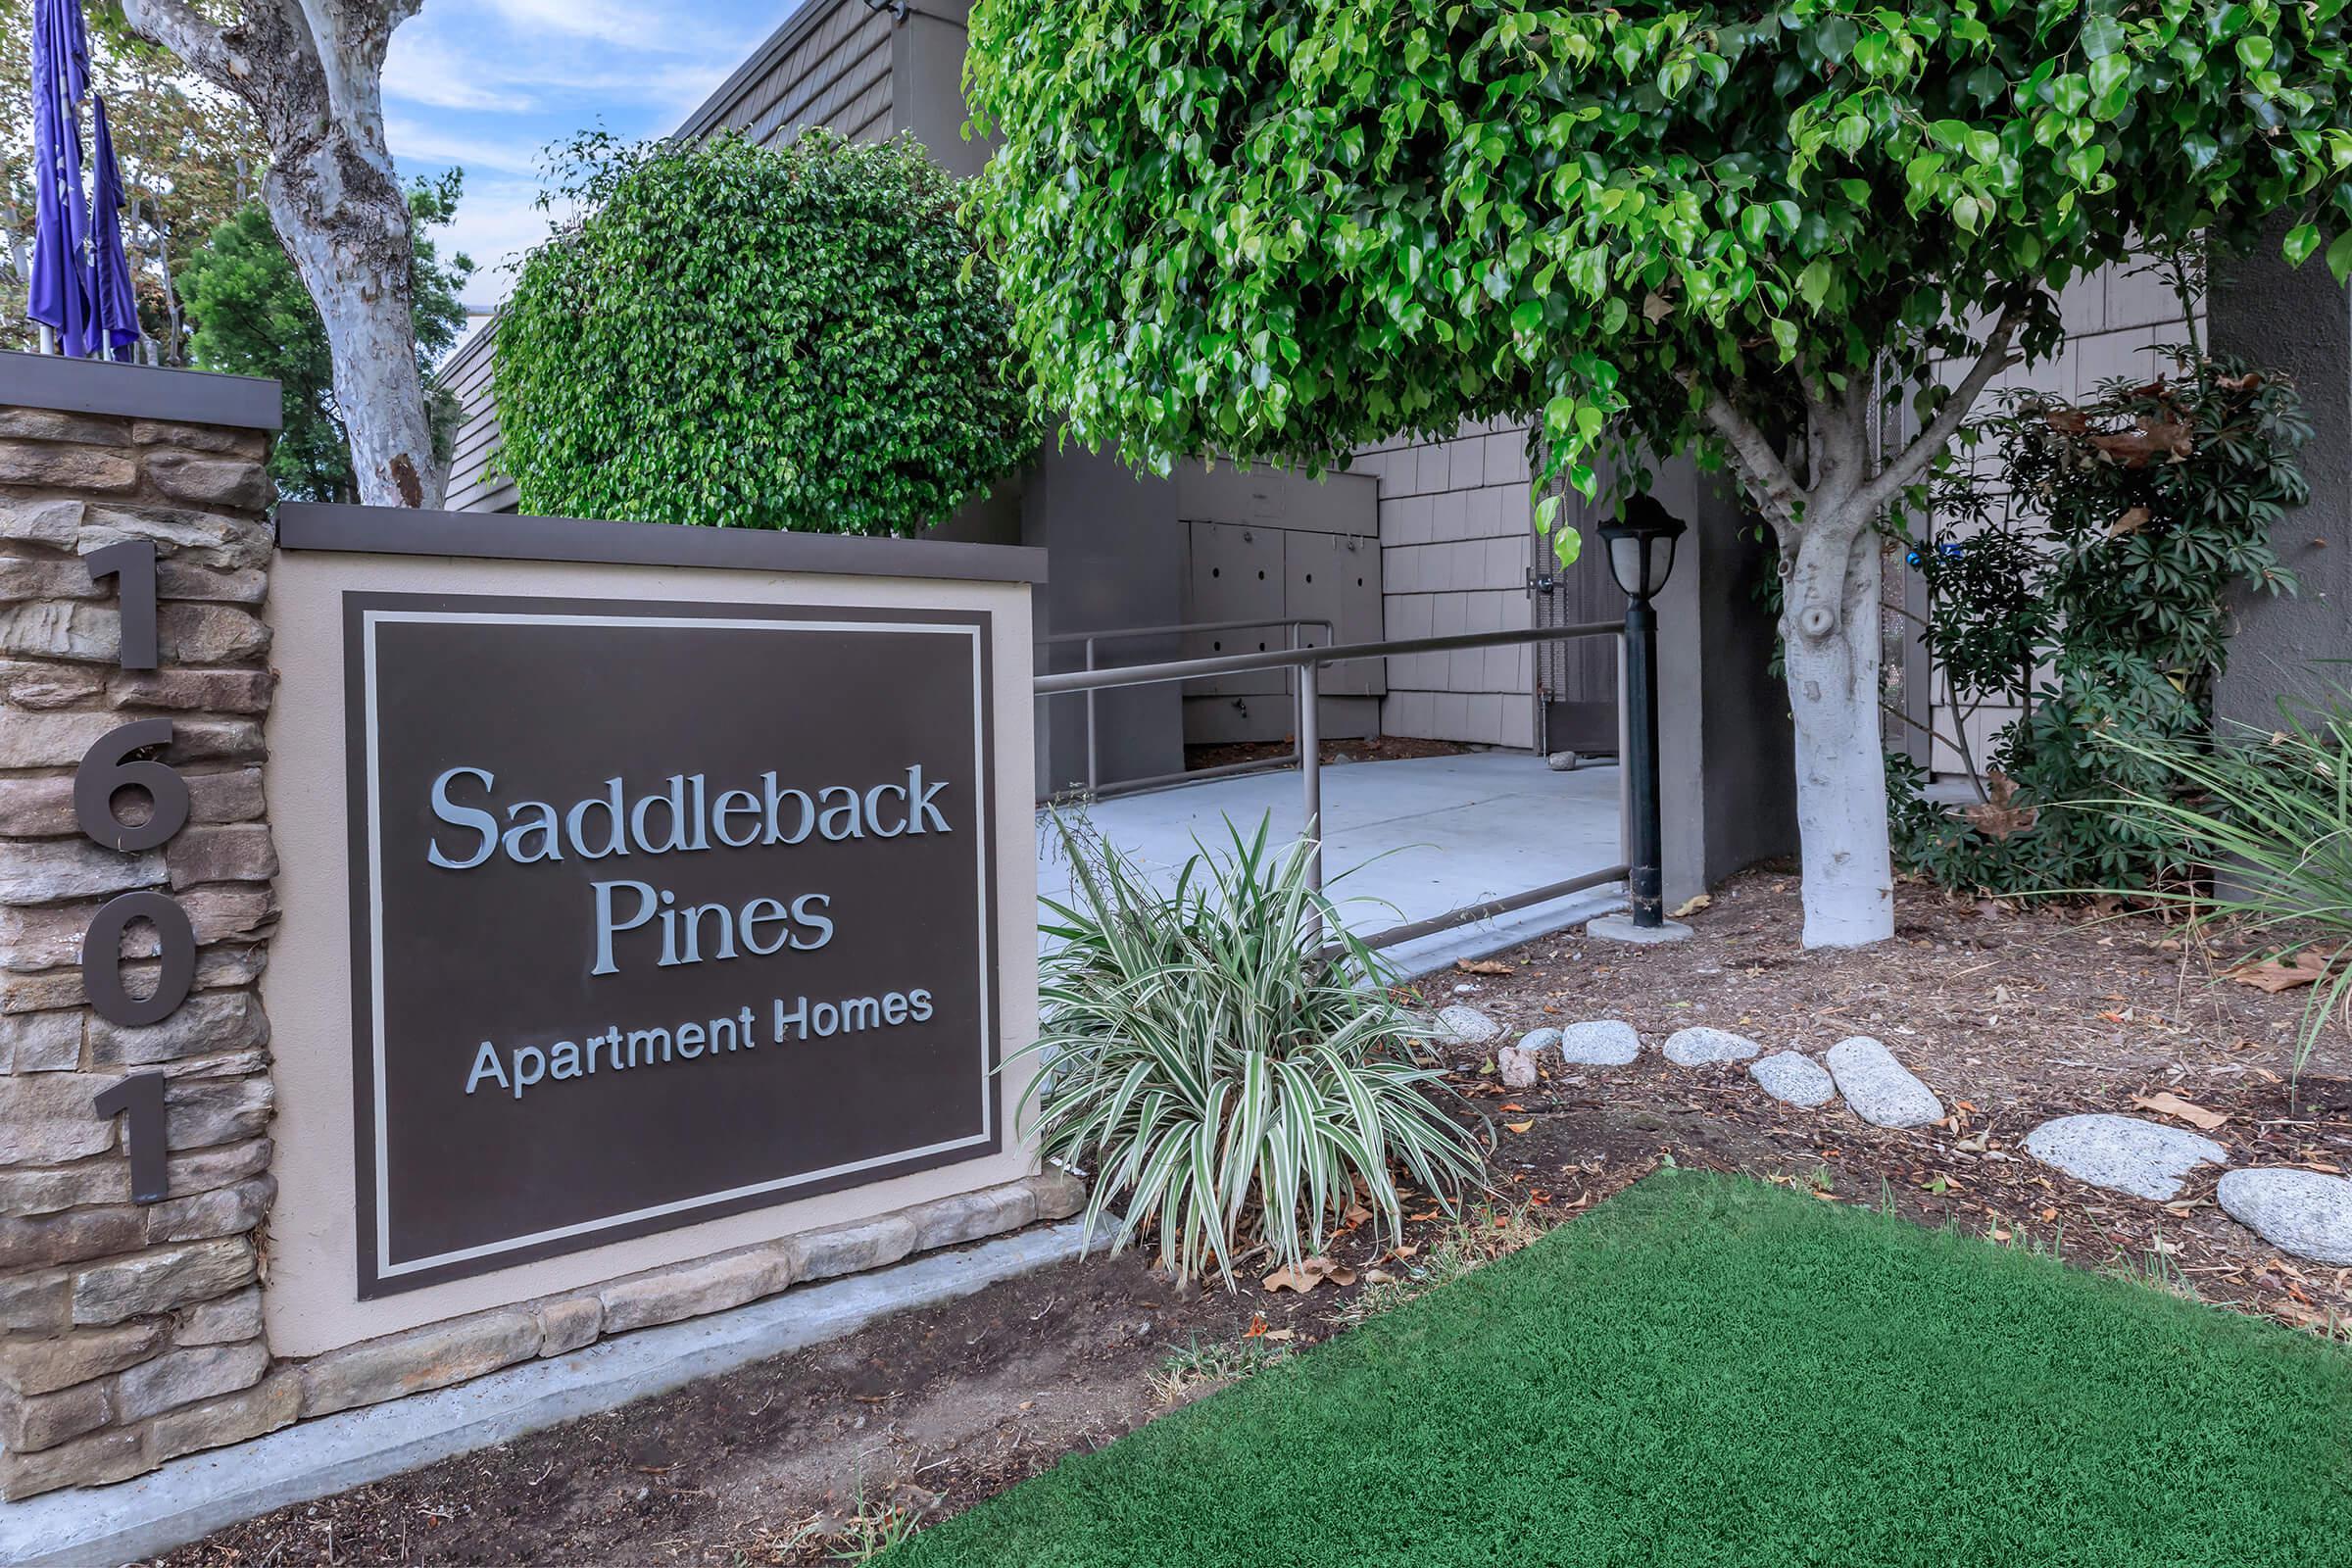 Saddleback Pines Apartment Homes monument sign